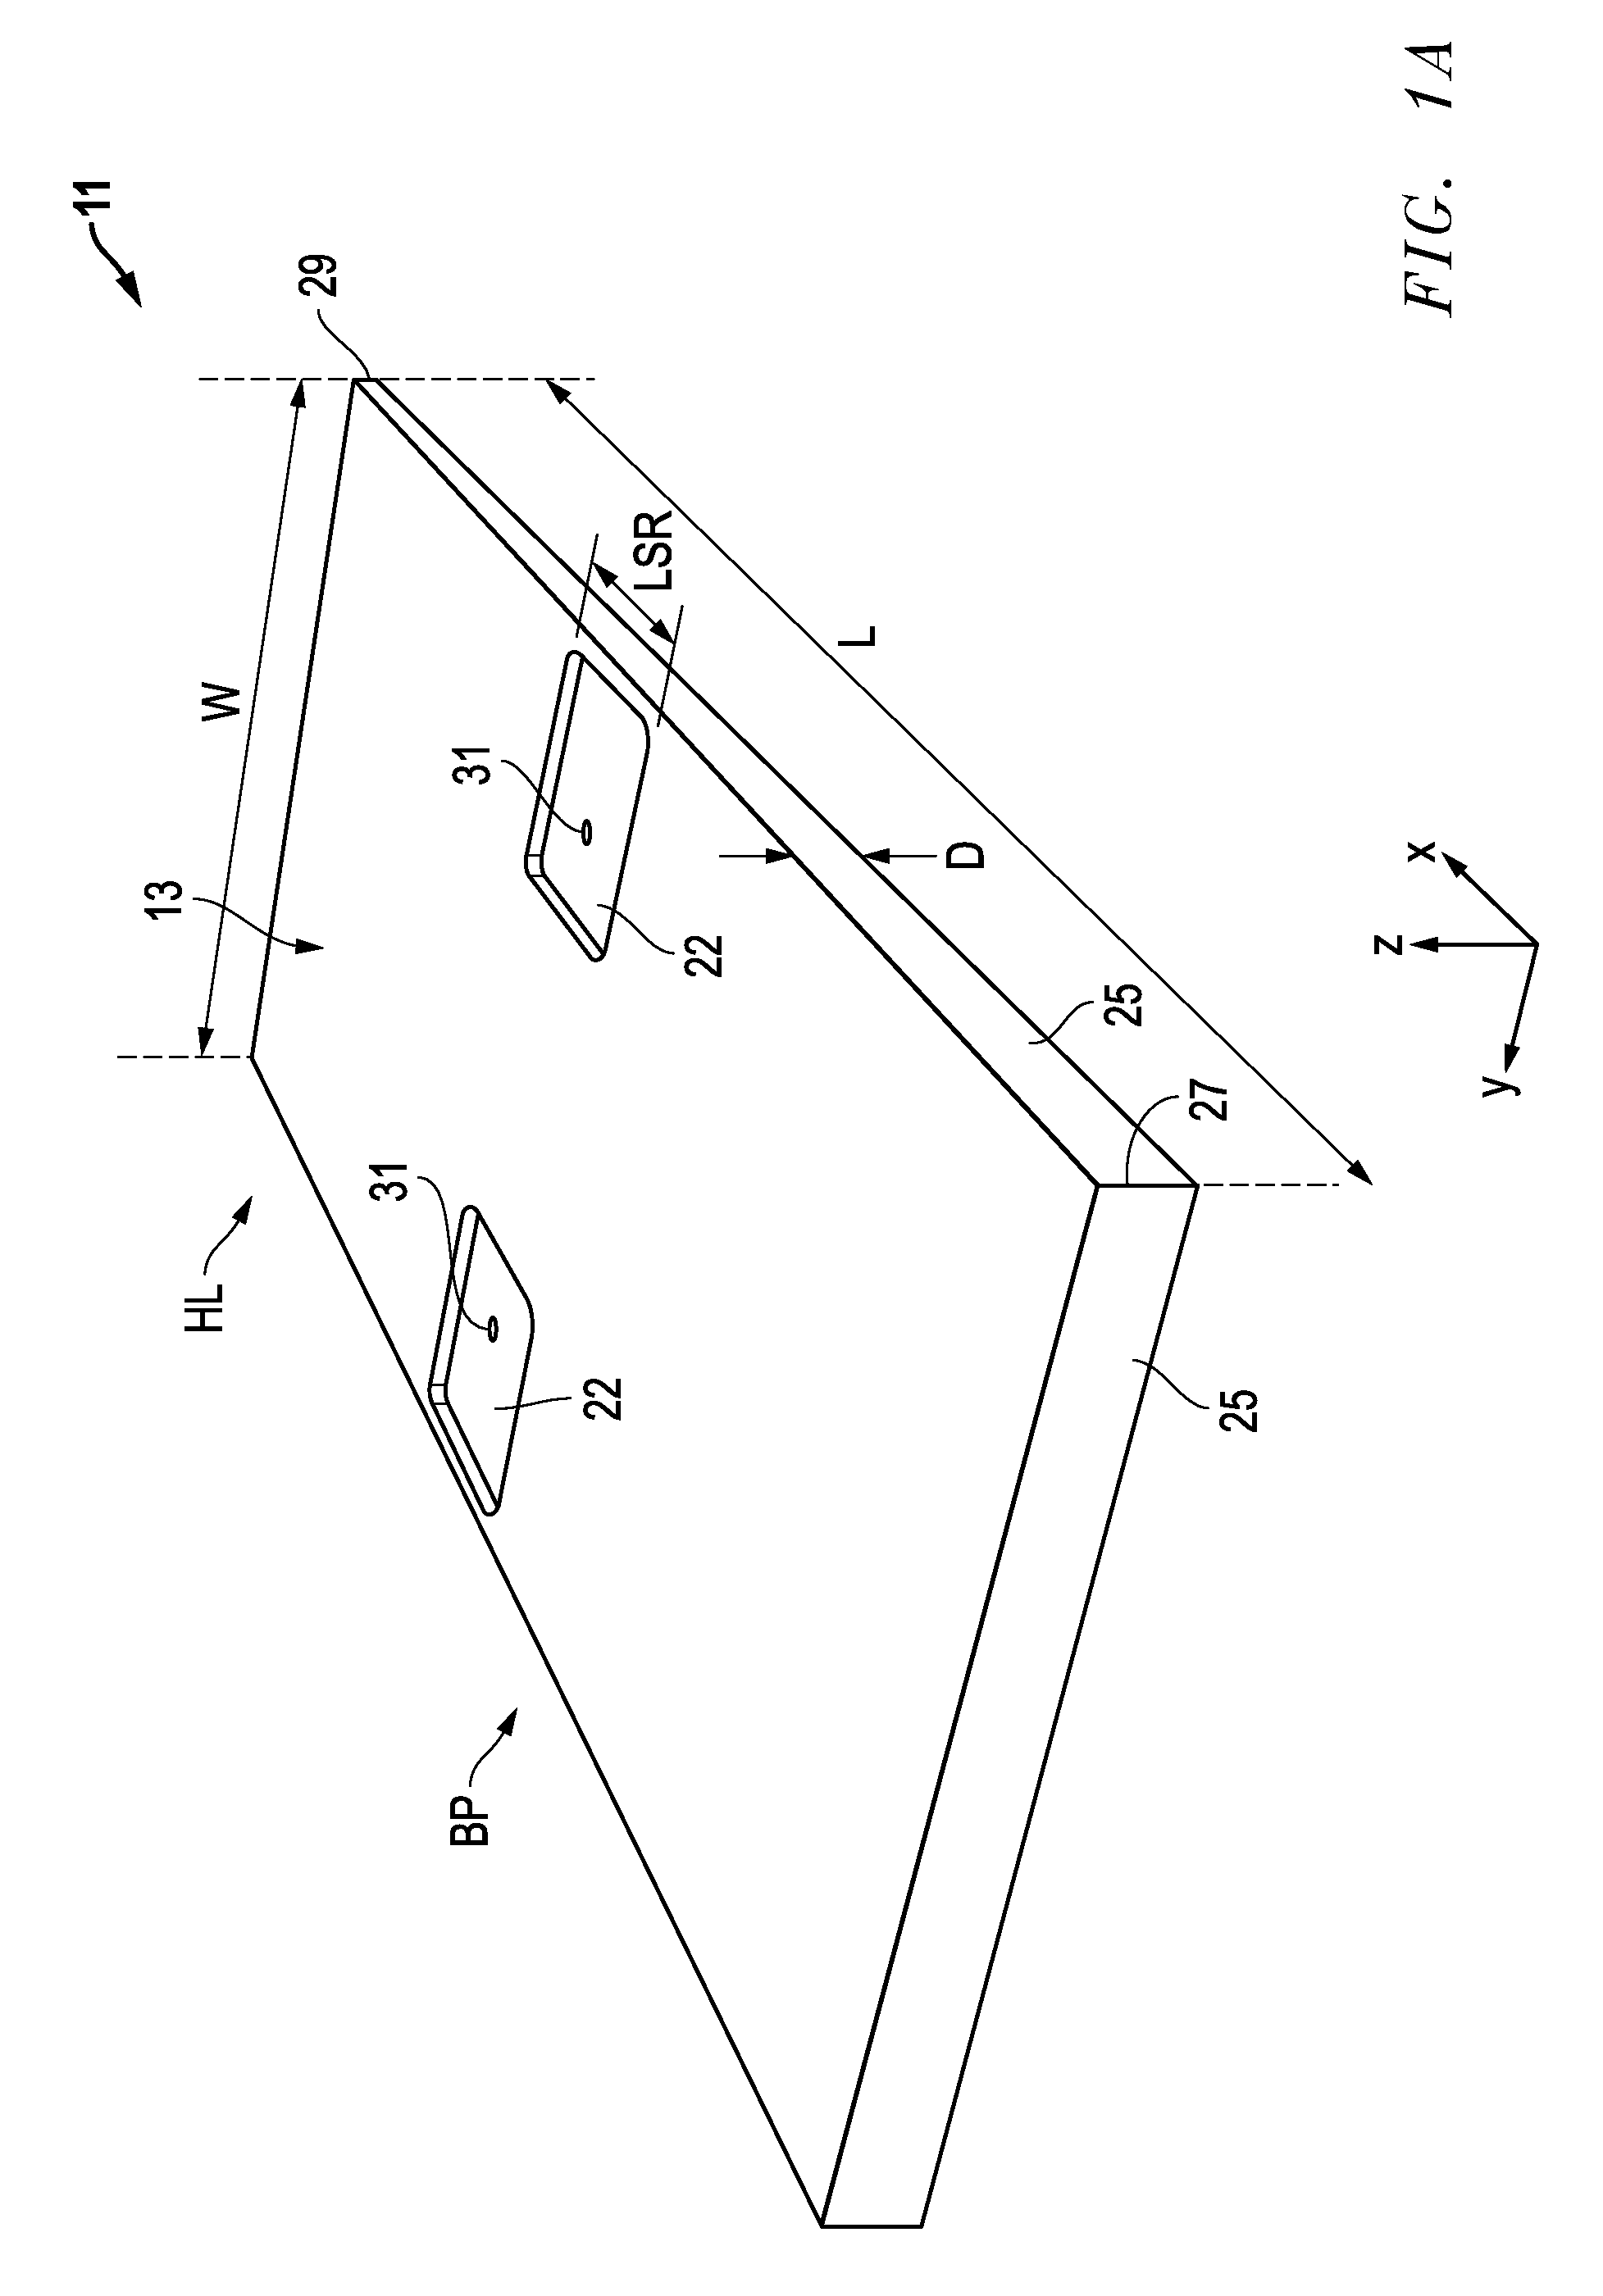 Single panel siding product